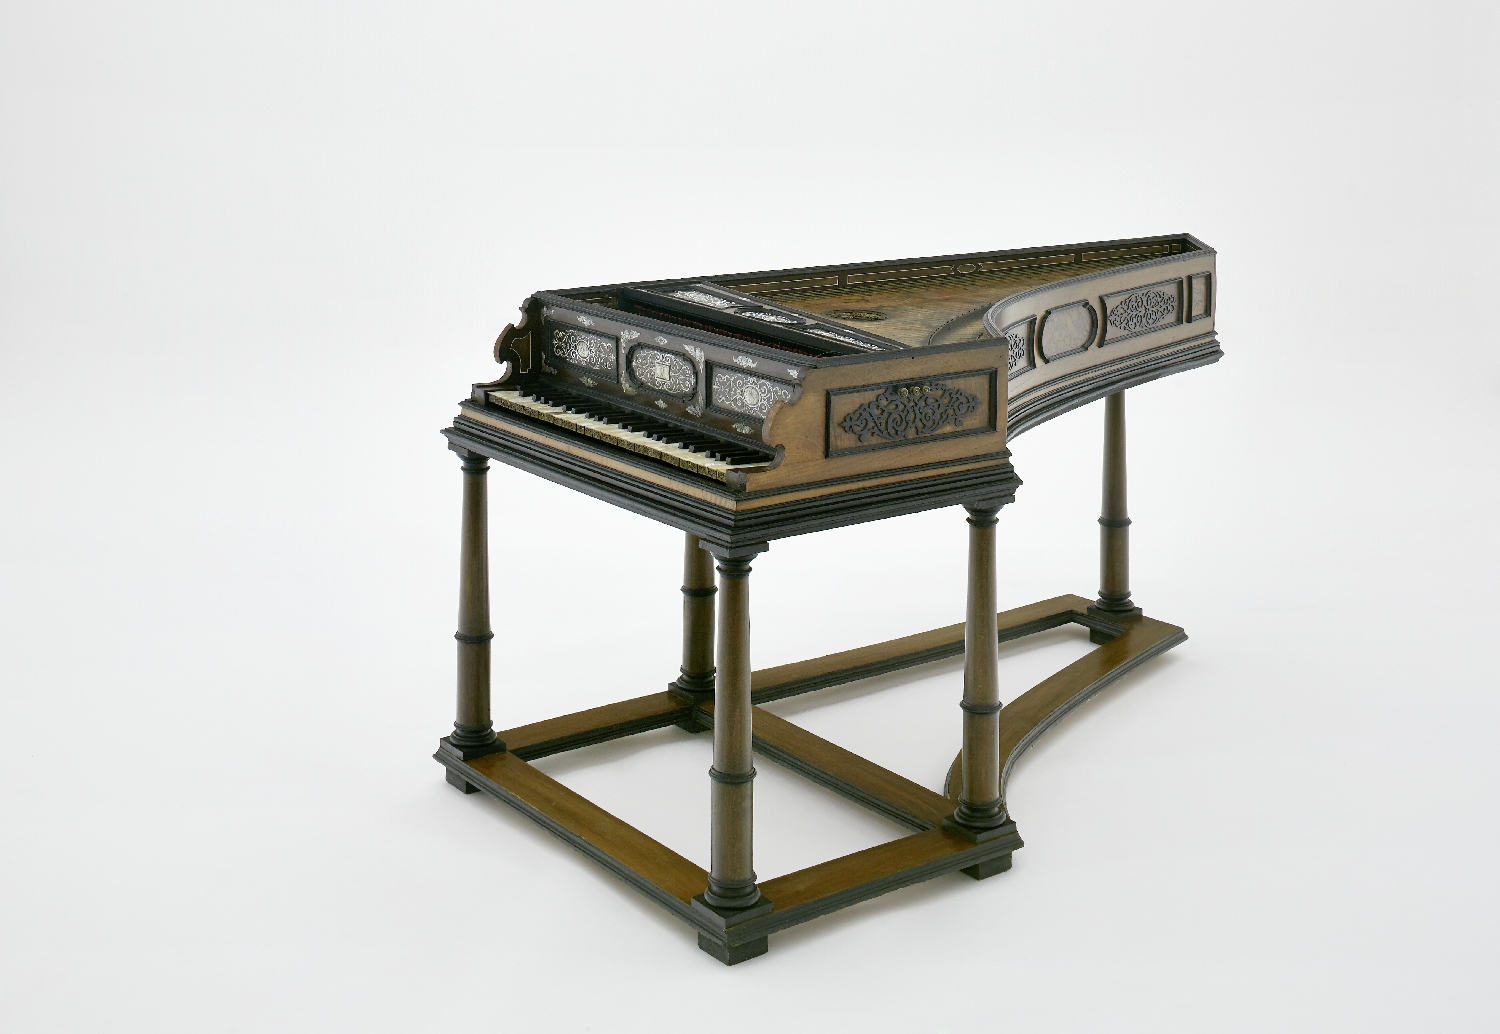 Harpsichord, Johannes Mayer, Stuttgart, 1619, wood (including ebony, walnut), mother-of-pearl, ivory, metal (iron, brass), quills, inv. no. MI 1015